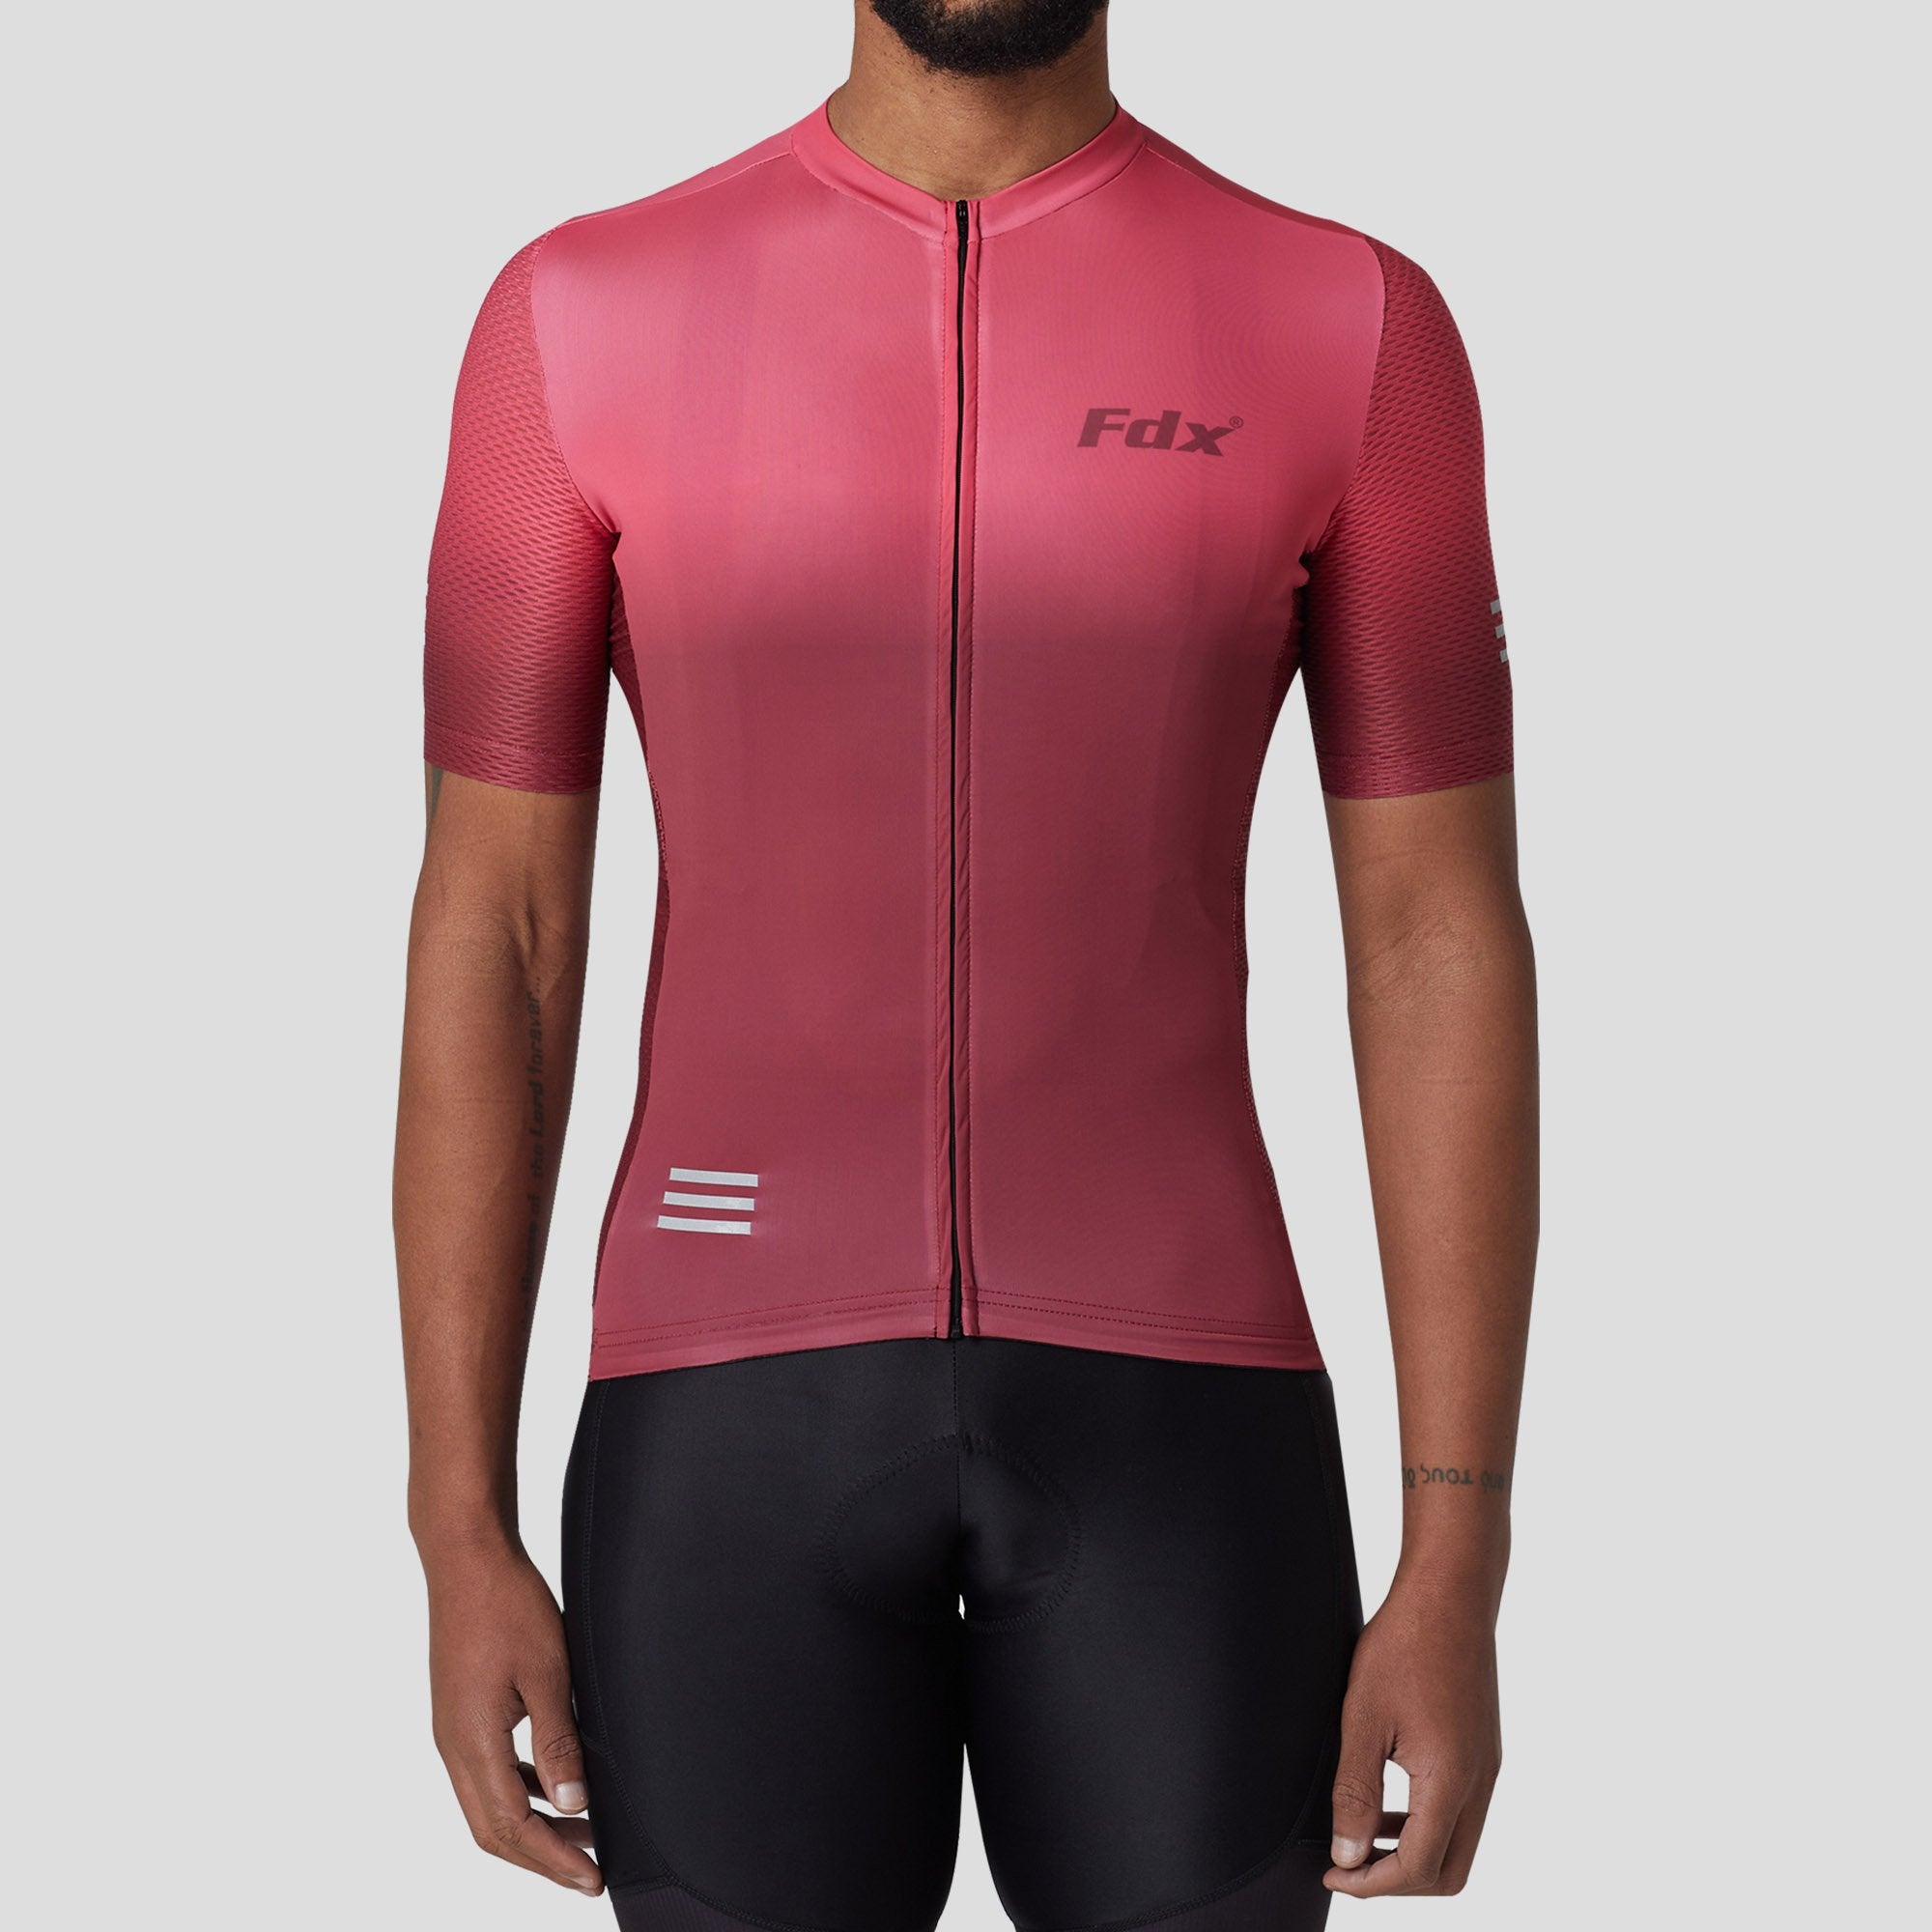 Fdx Duo Pink / Maroon Men's Short Sleeve Summer Cycling Jersey